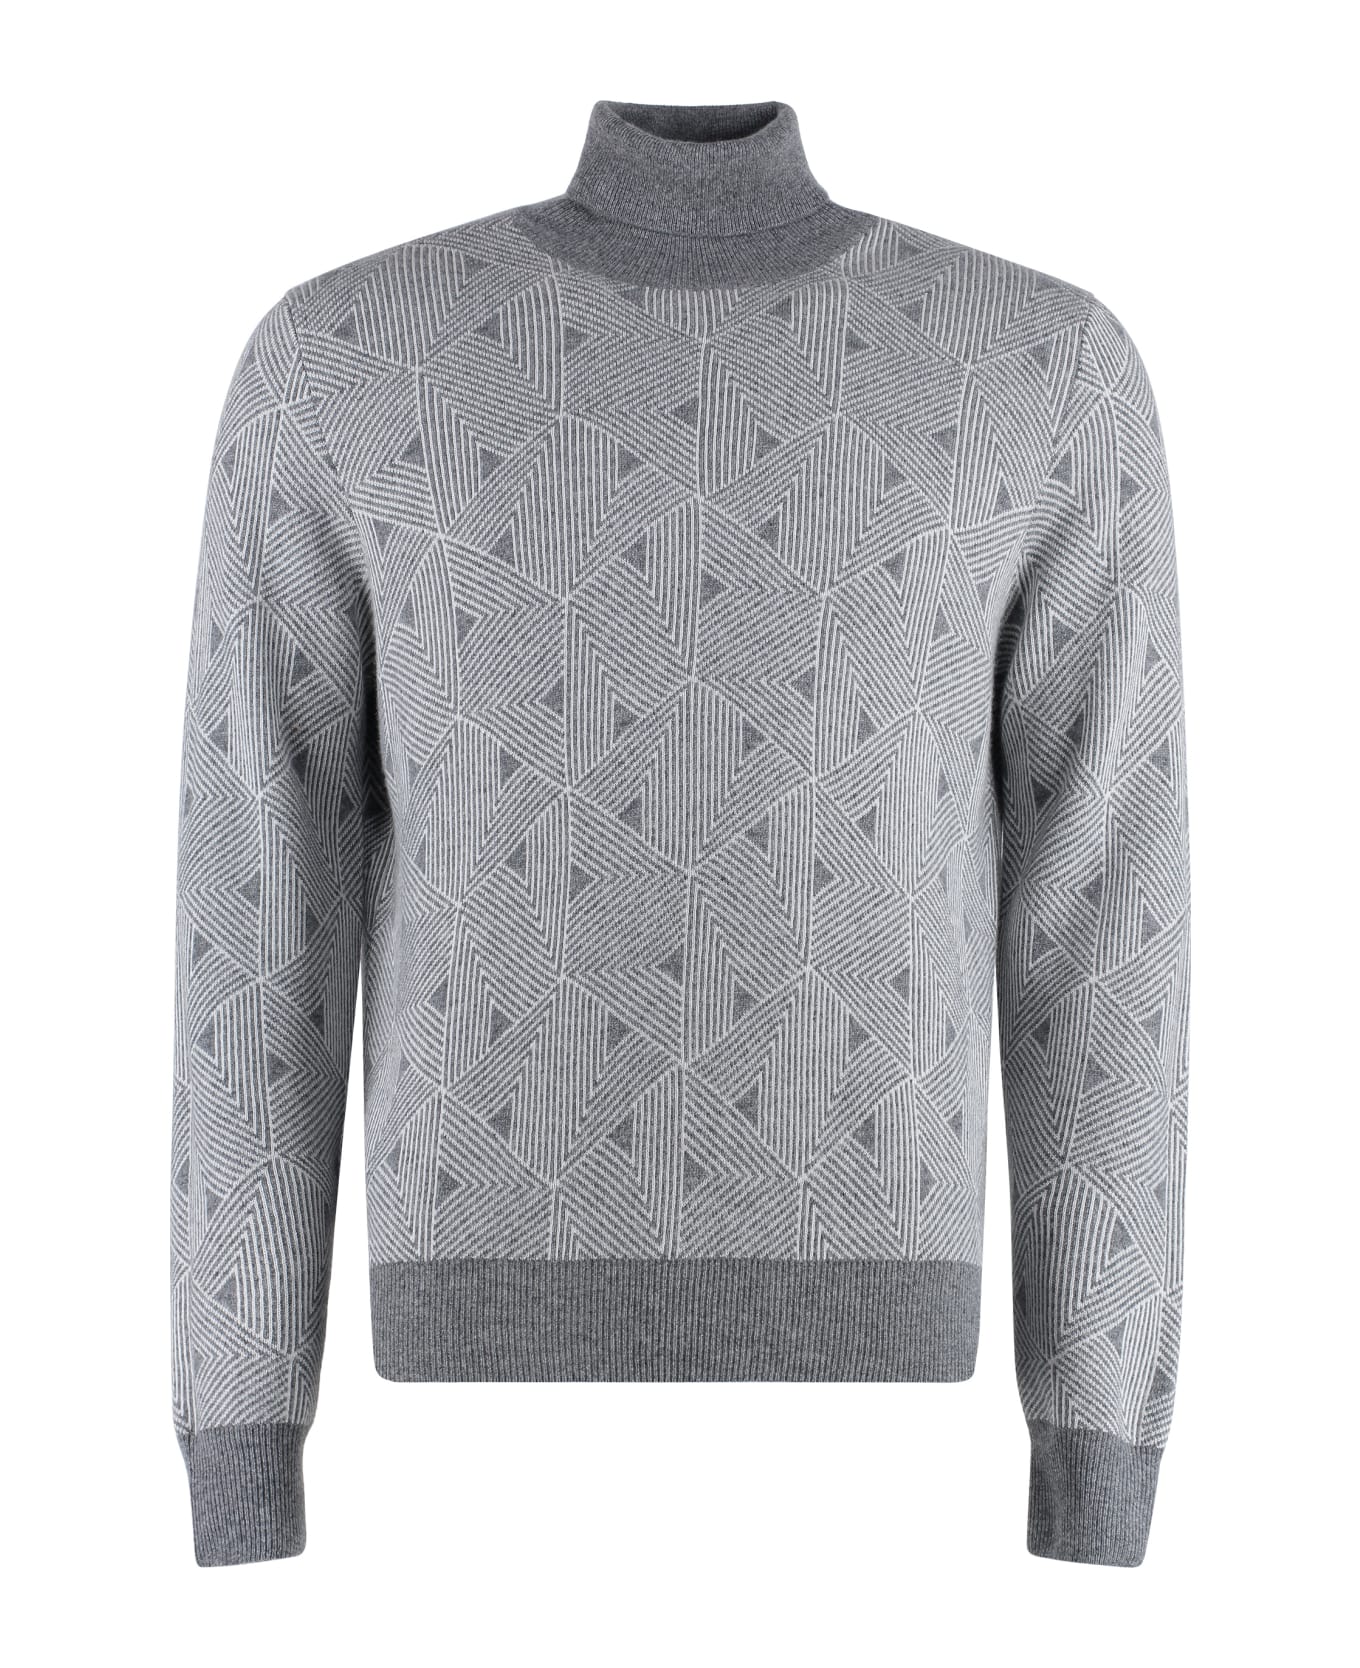 Canali Cashmere Blend Turtleneck Sweater - grey